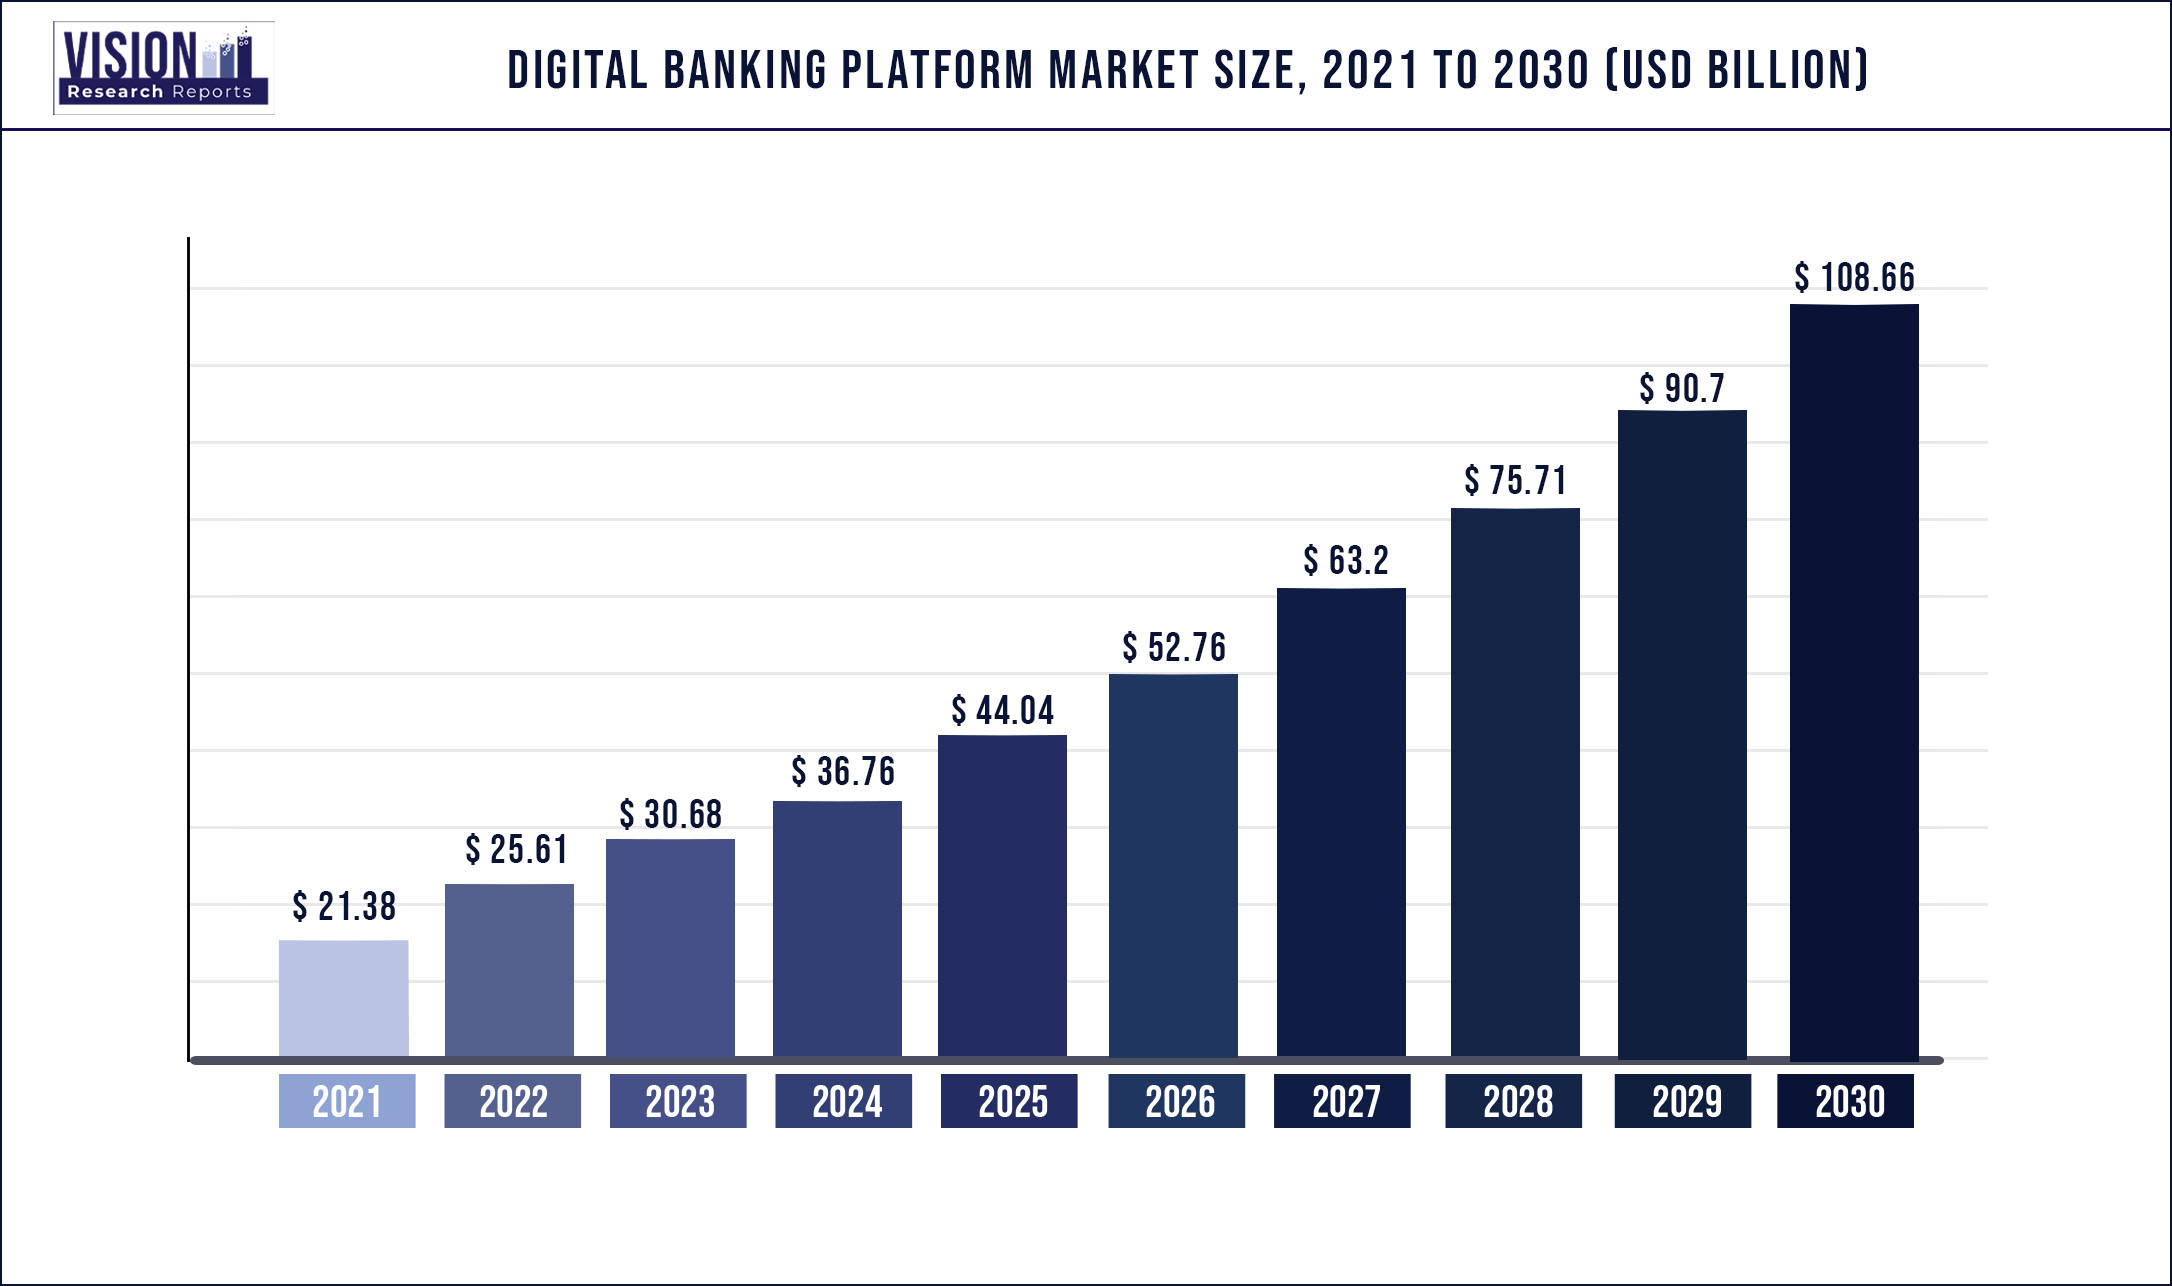 Digital Banking Platform Market Size 2021 to 2030